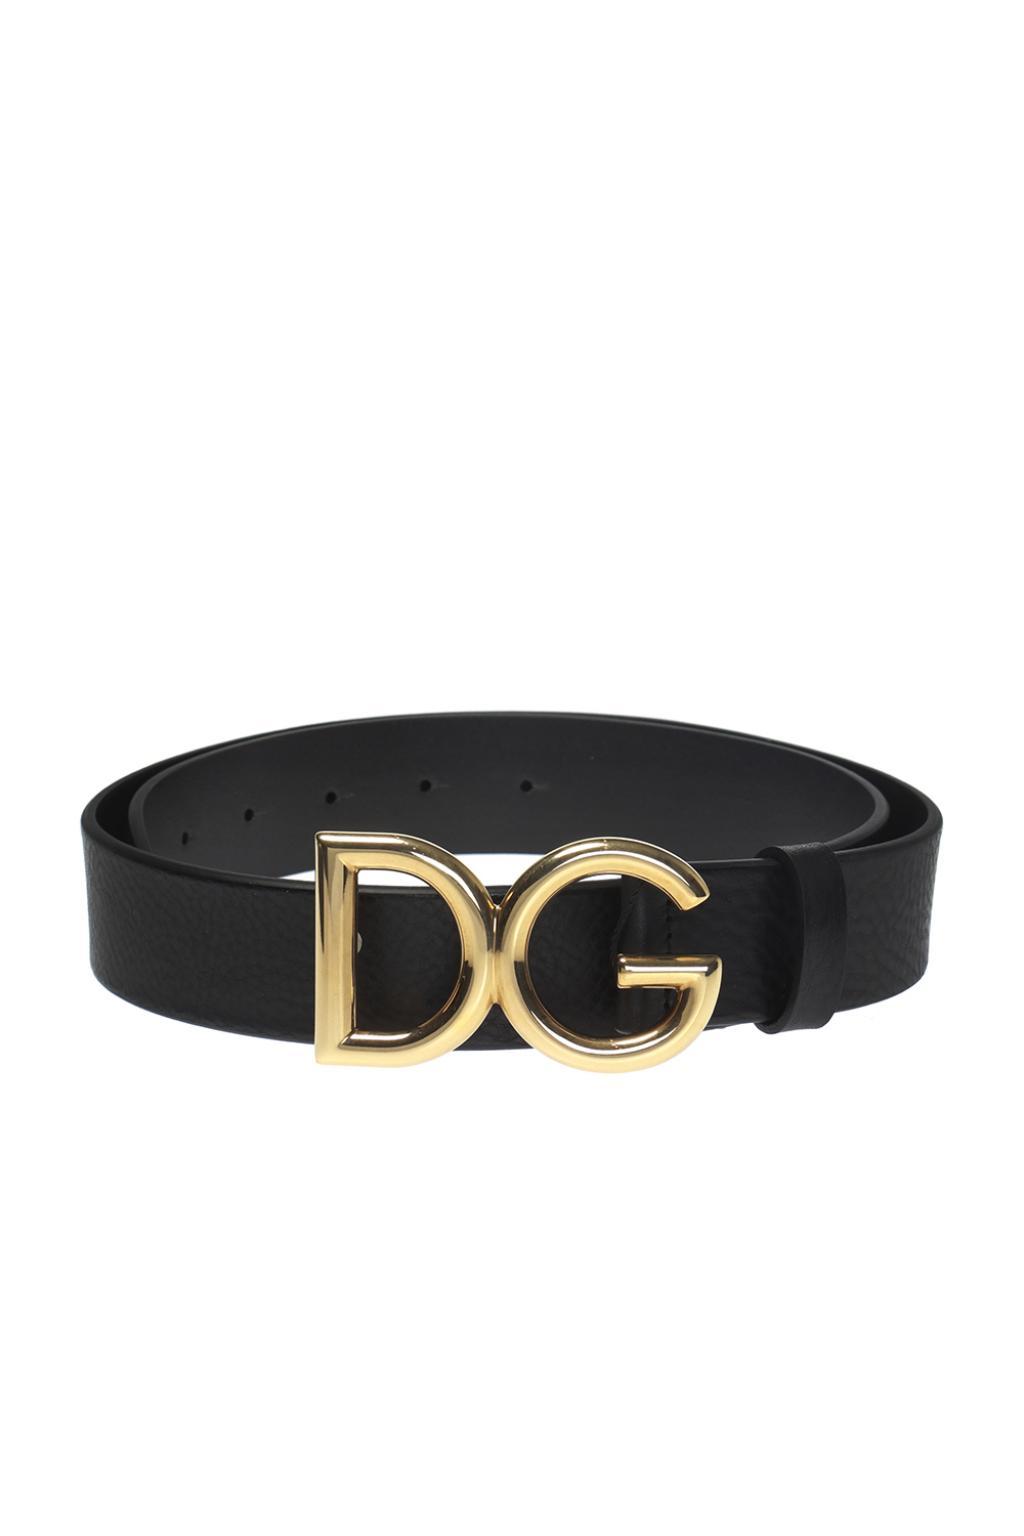 Dolce & Gabbana Leather Logo-buckle Belt in Black for Men - Lyst